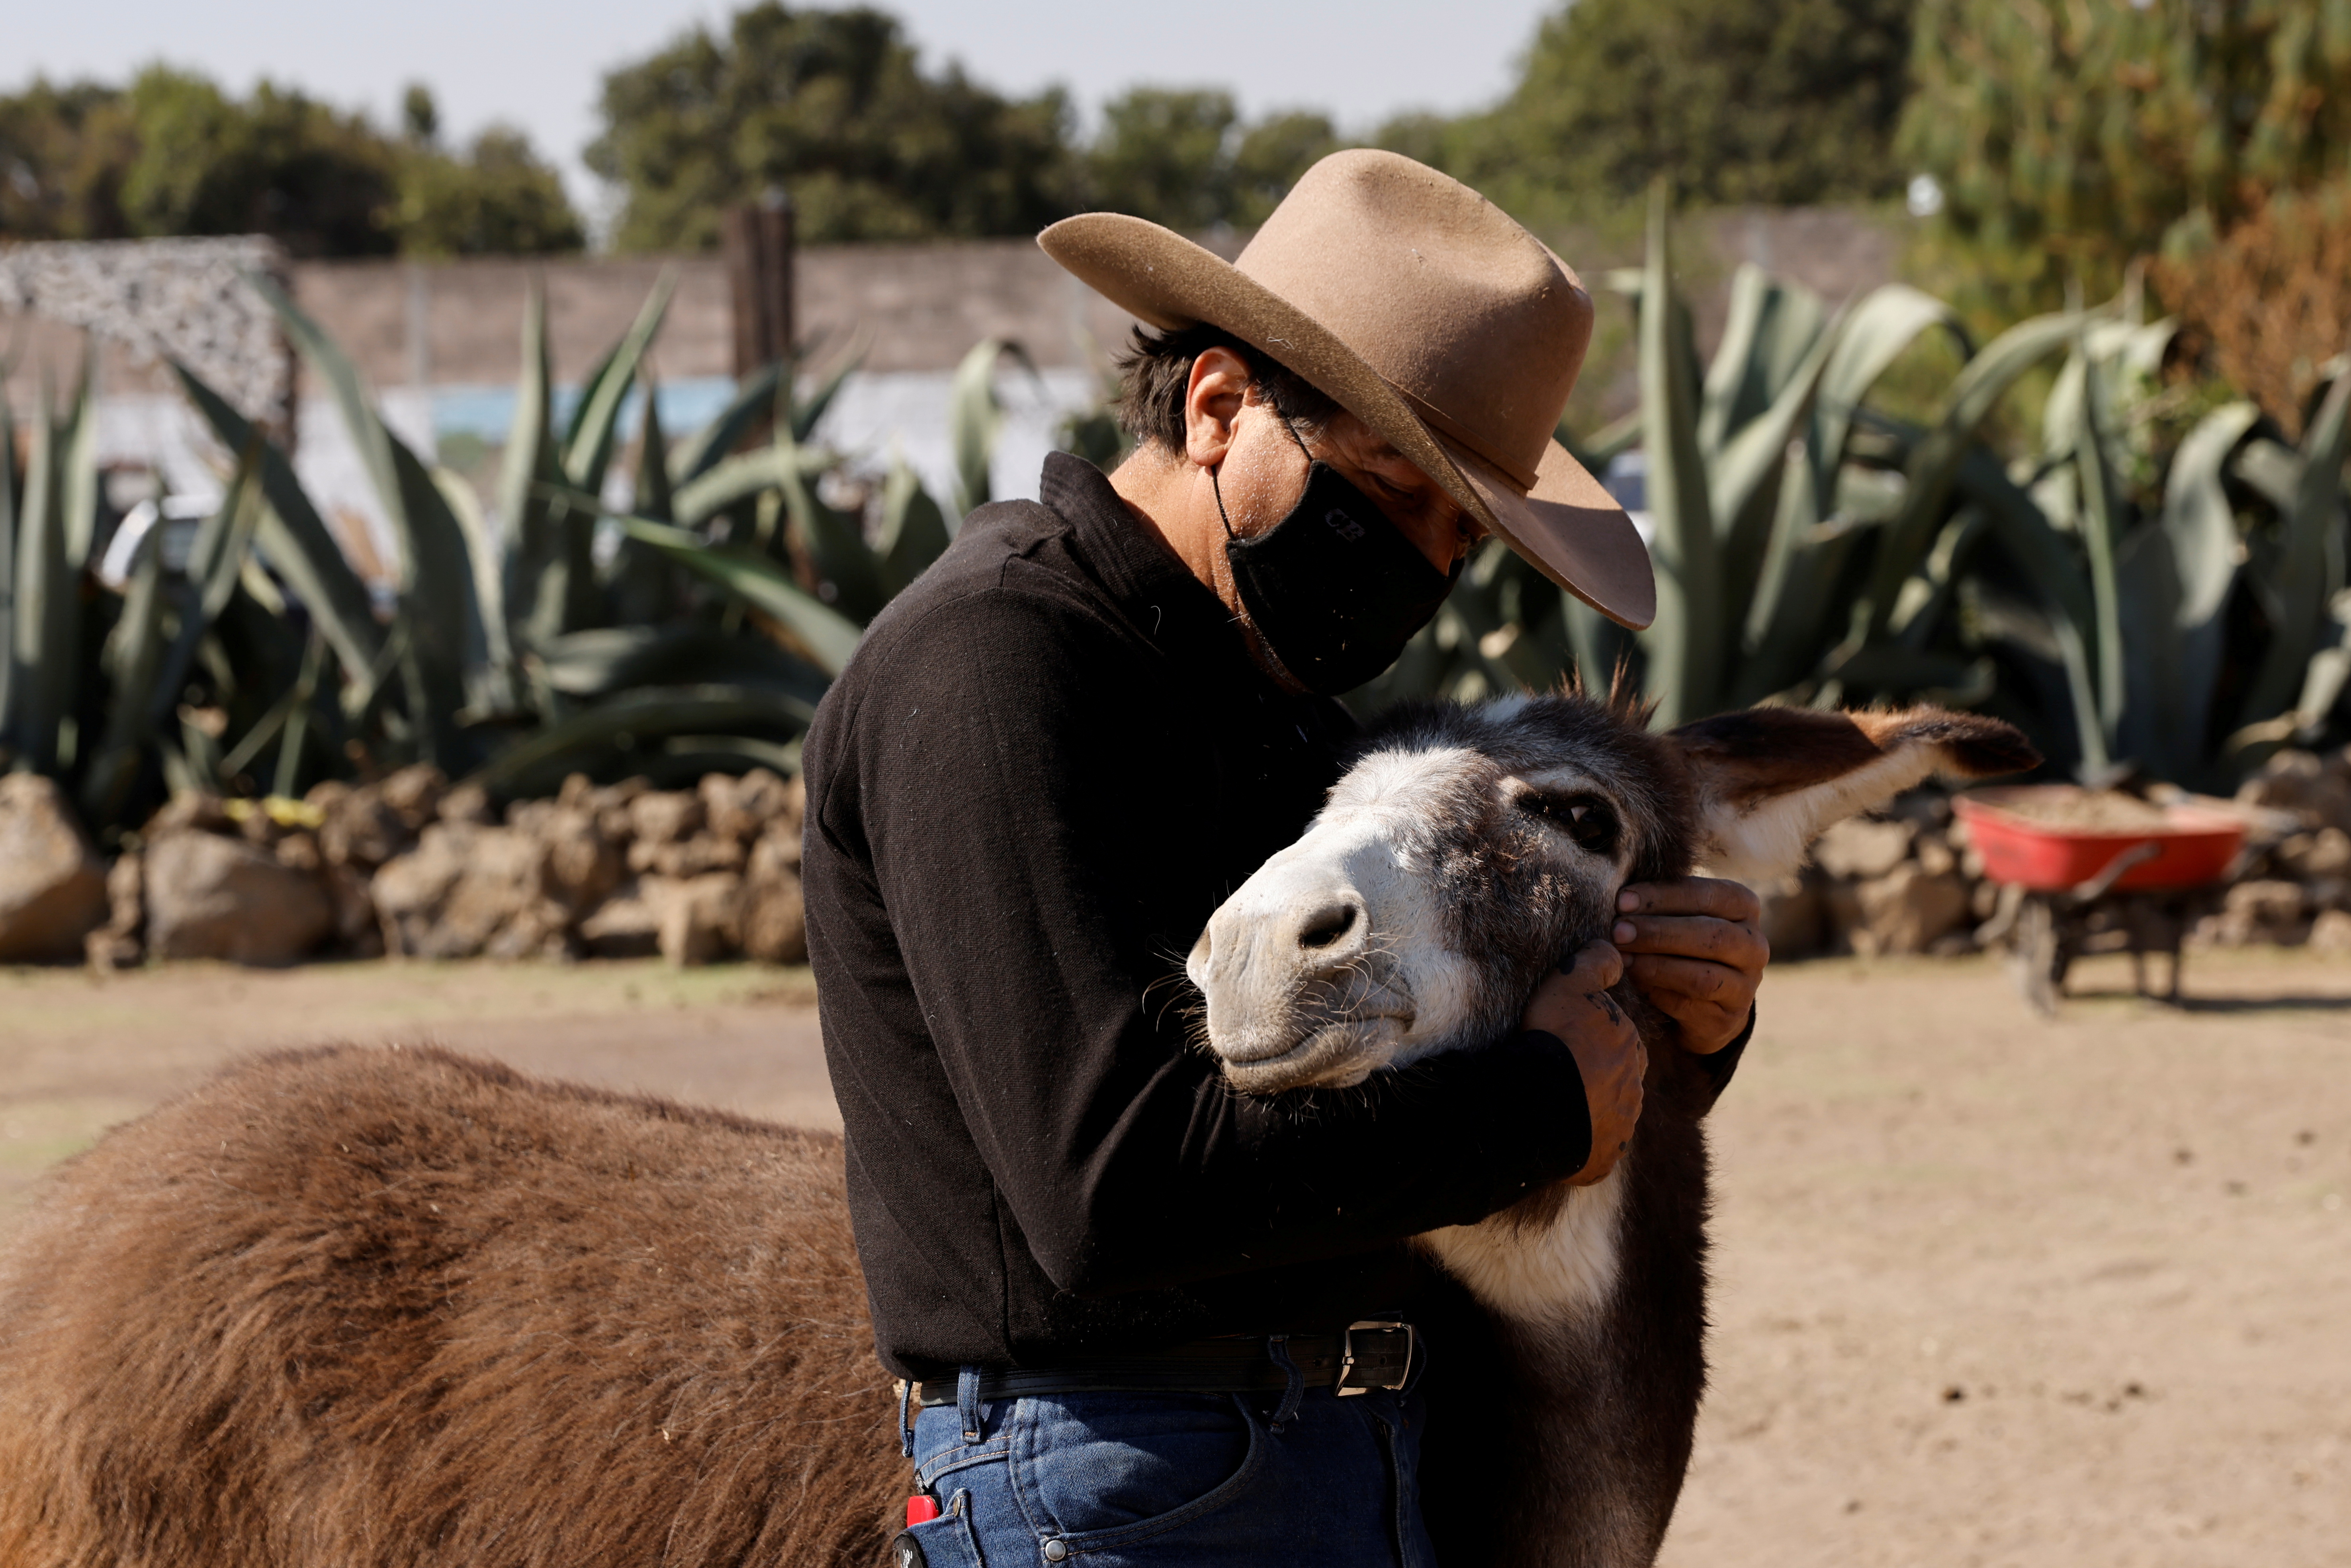 Guanajuato - Alcalde panista regala burros a niños para ir a la escuela en Guanajuato  - Página 4 GVNNZVIU3I2E3TBLTNFVDNGXEI